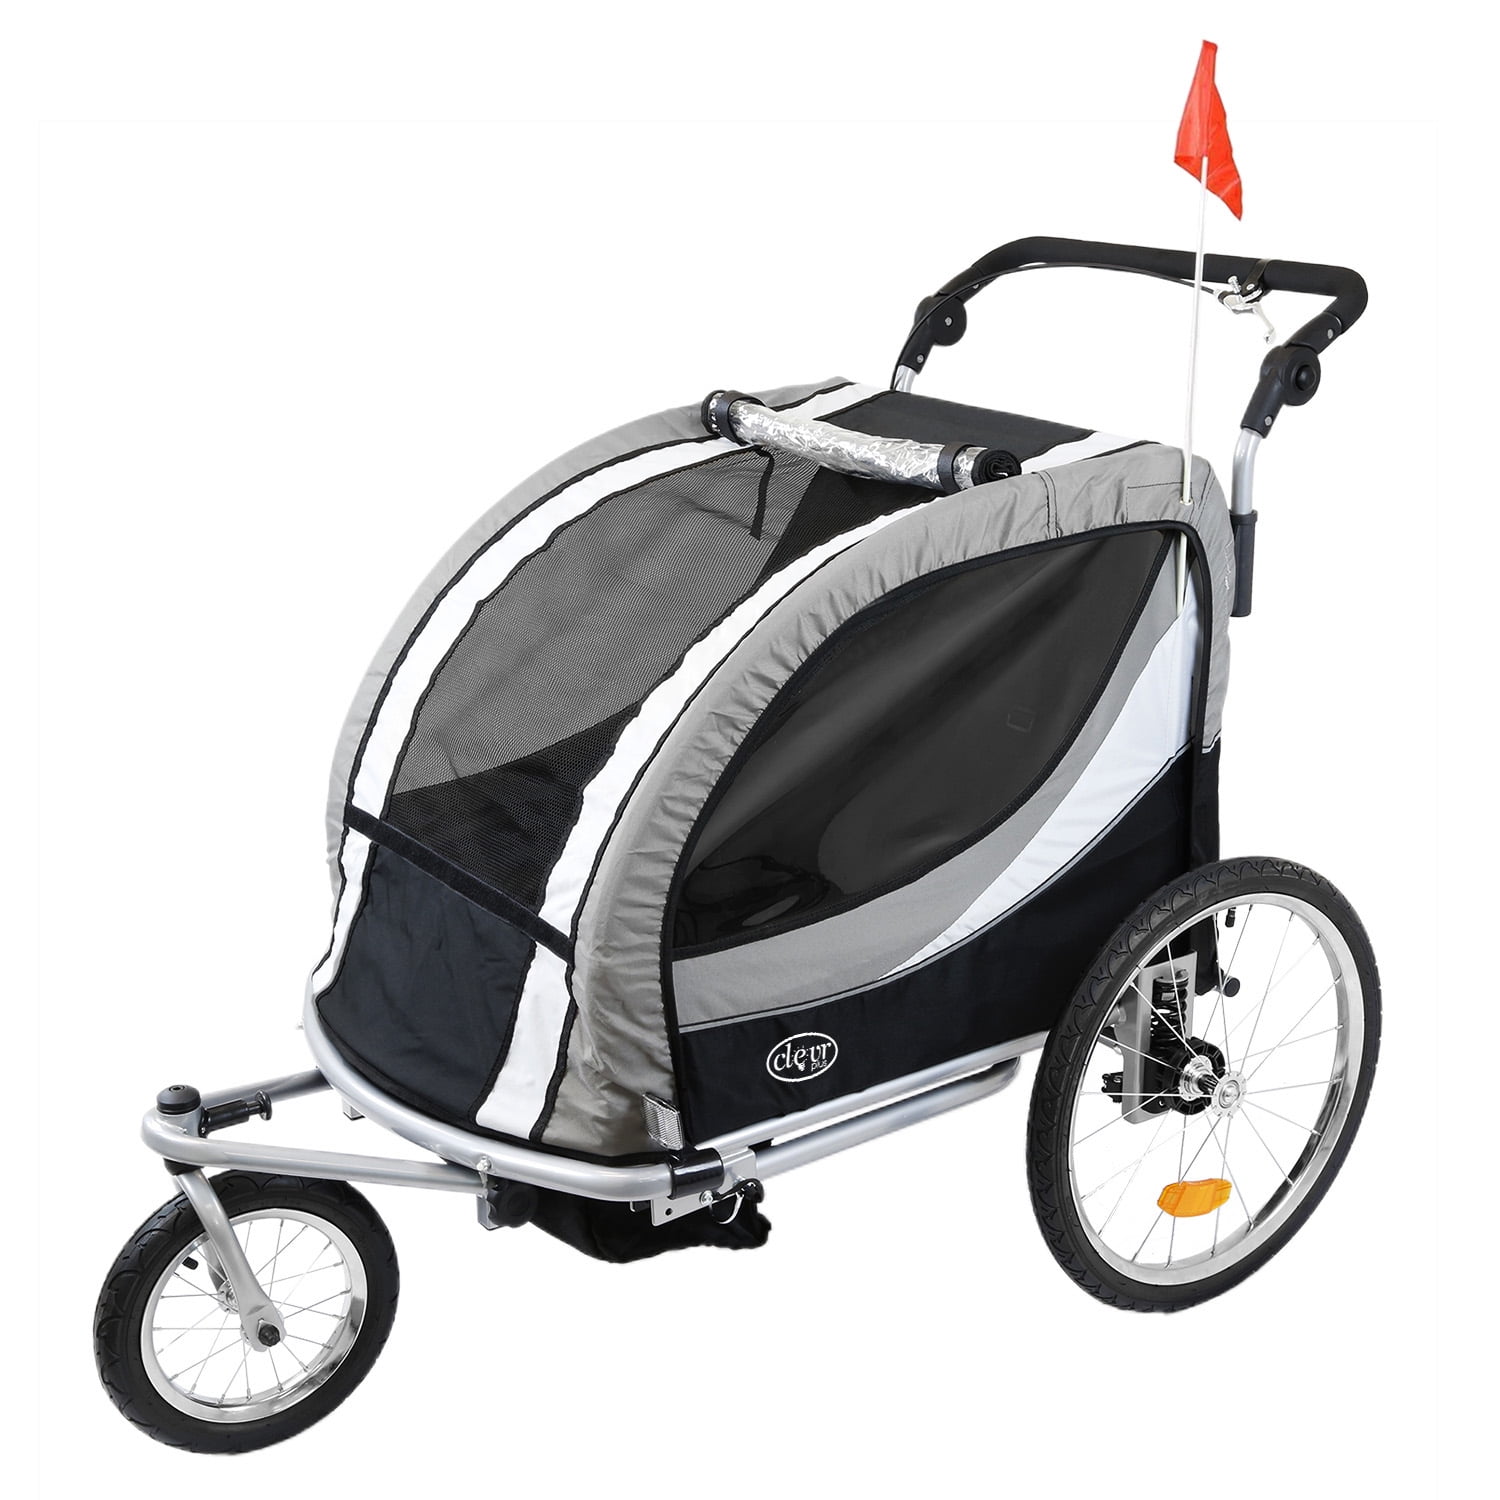 Sports Deluxe 2-Child Bike Trailer 5 Point Safety Harness 16" Wheels Lightweight 